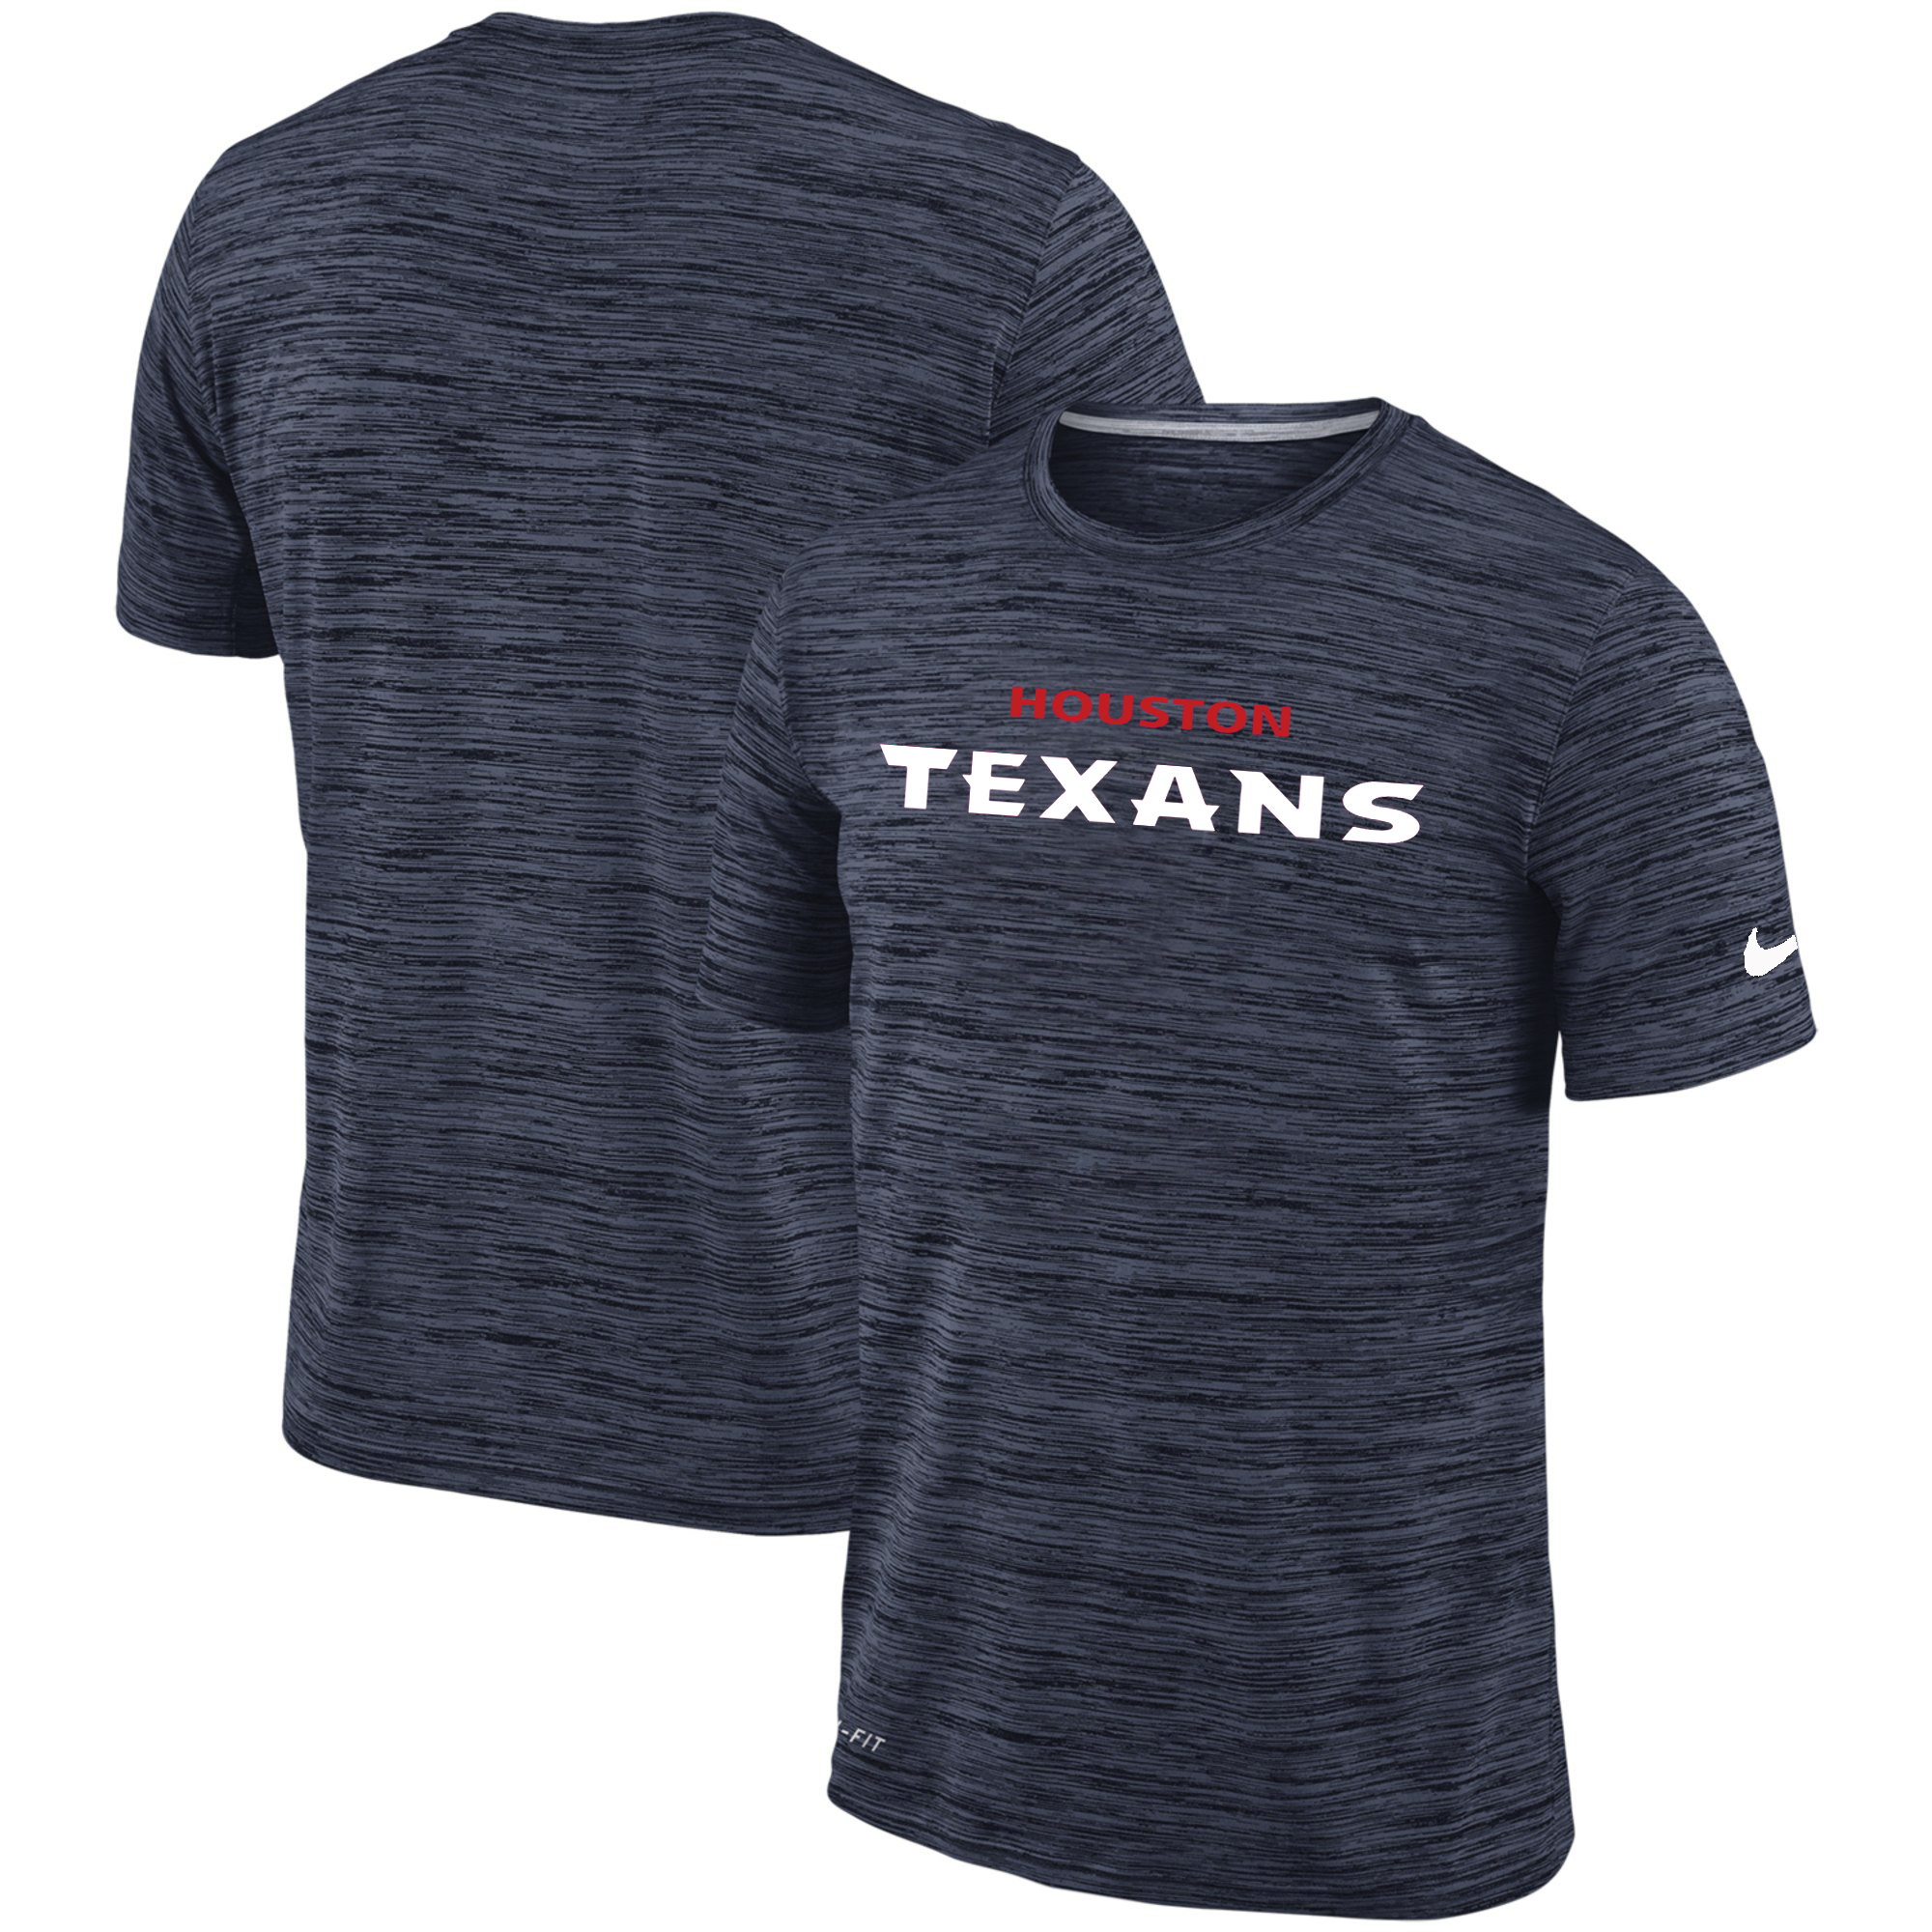 Men's Houston Texans Nike Navy Velocity Performance T-Shirt - Click Image to Close